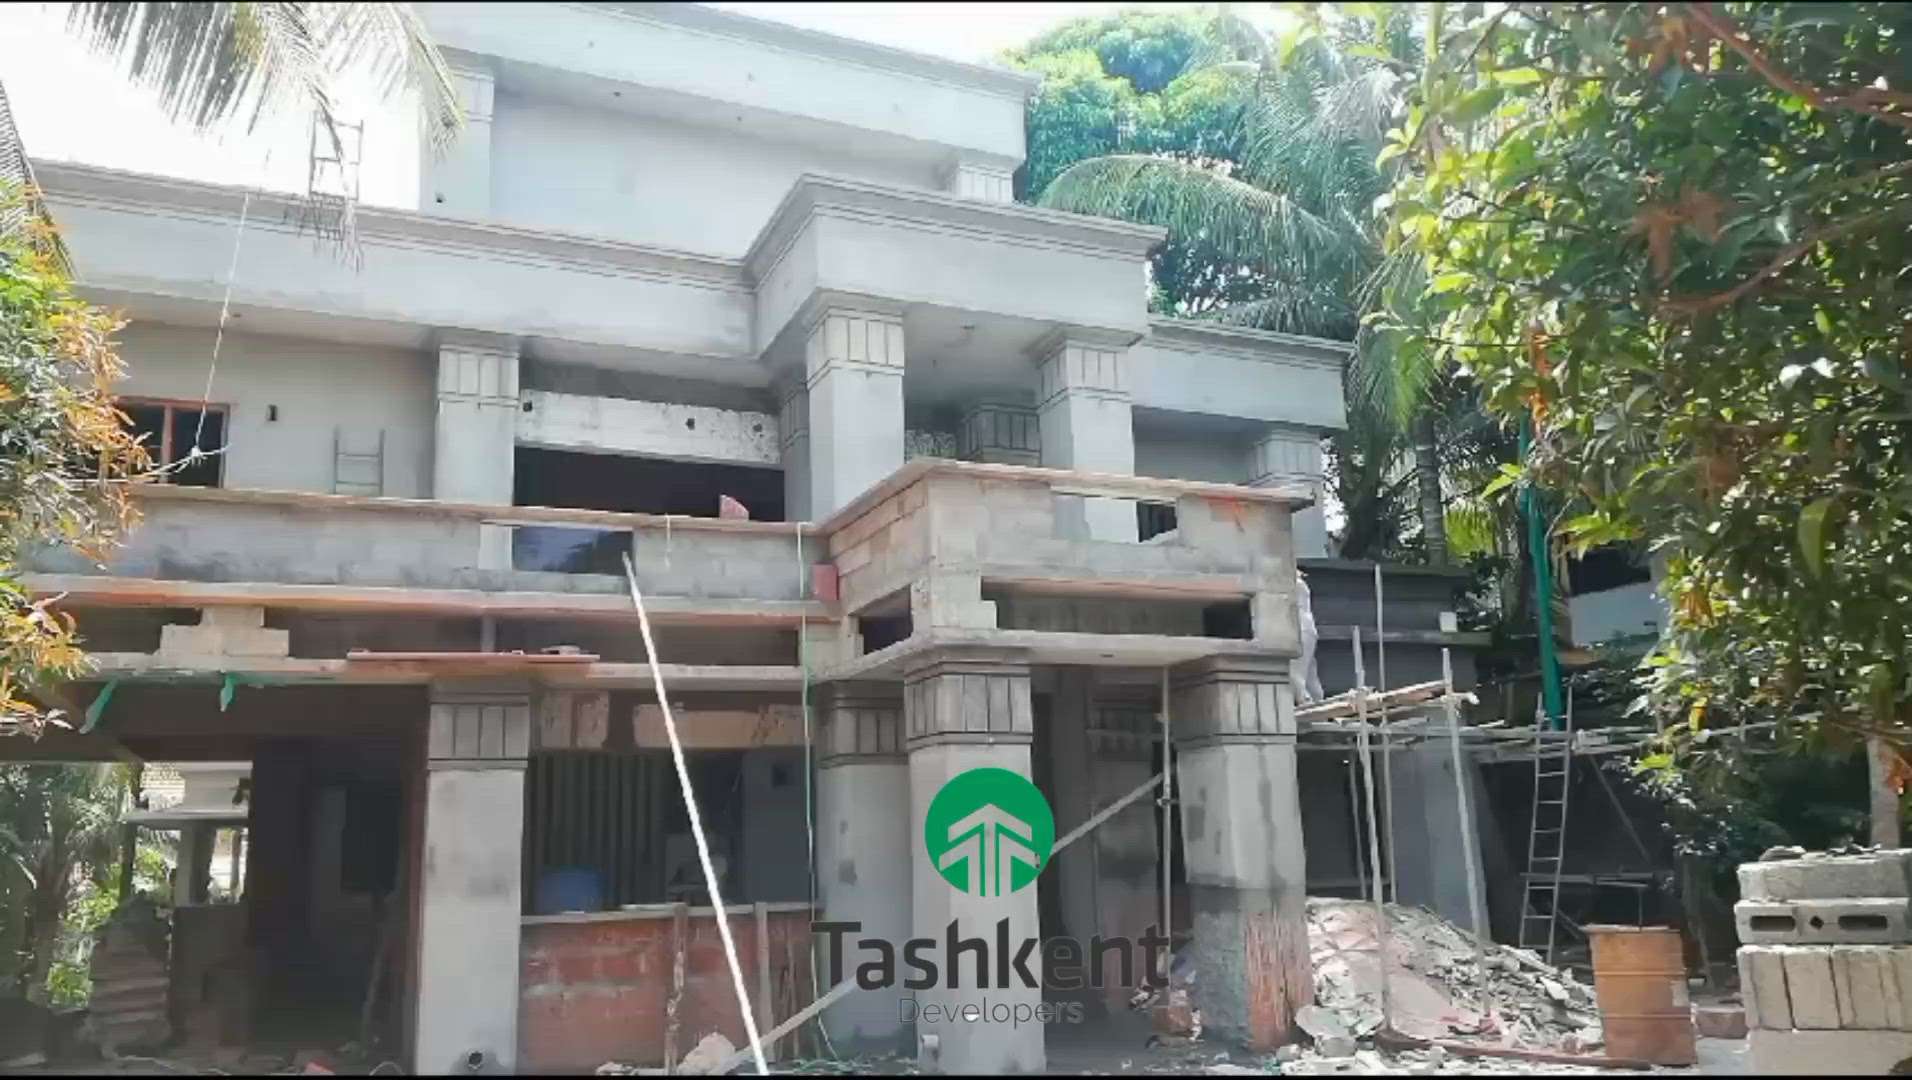 renovation at Kozhikode
work in progress